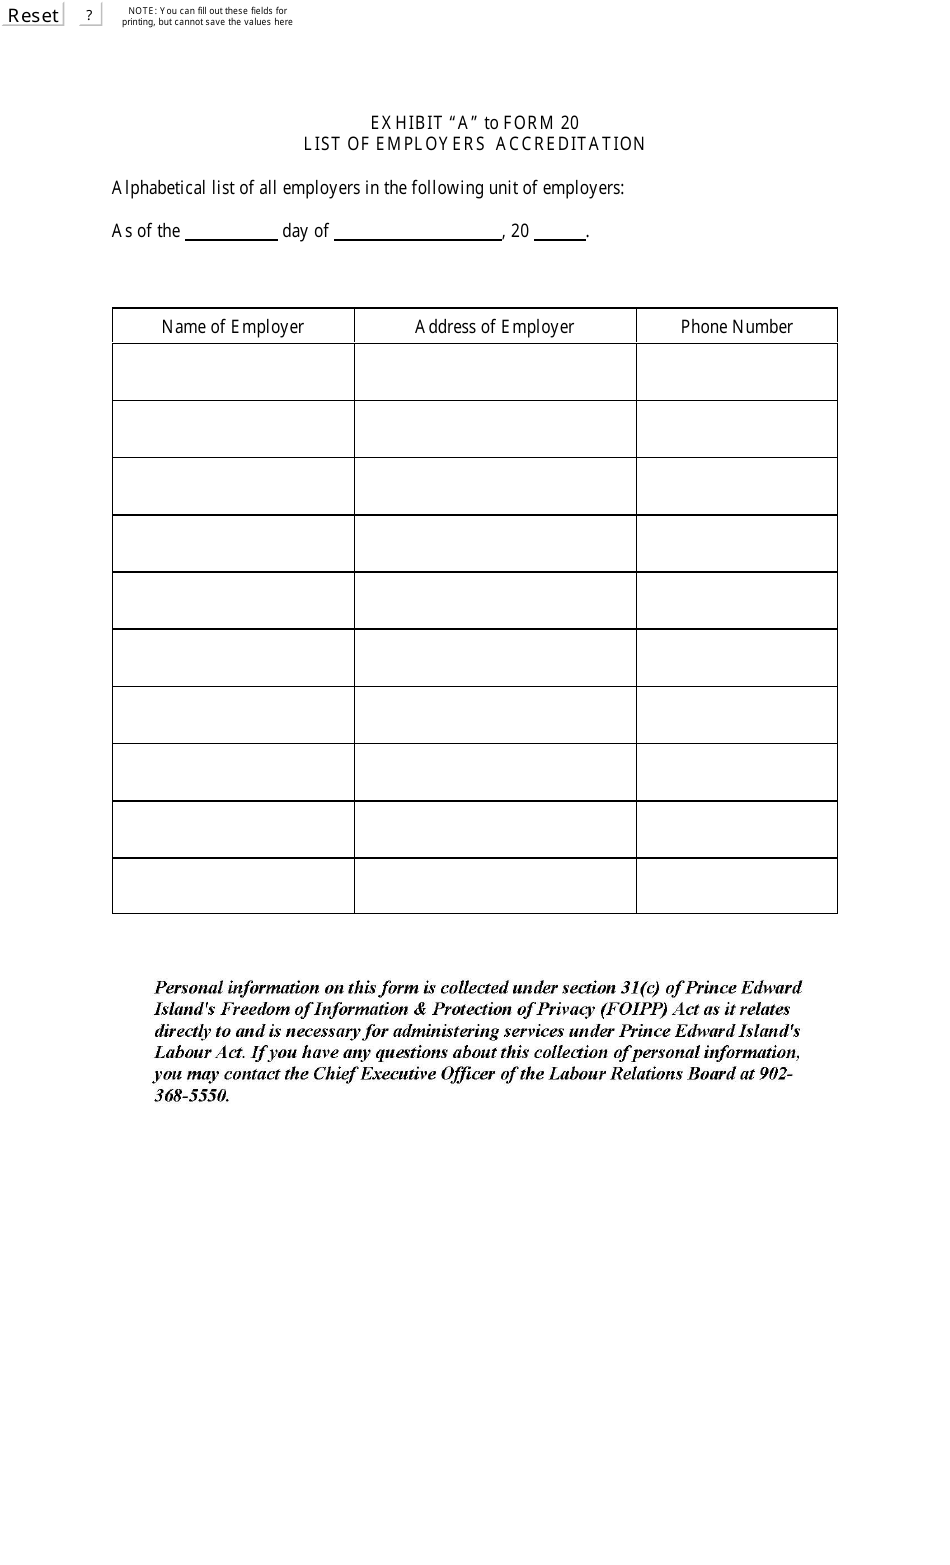 Form 20 Exhibit A List of Employers Accreditation - Prince Edward Island, Canada, Page 1